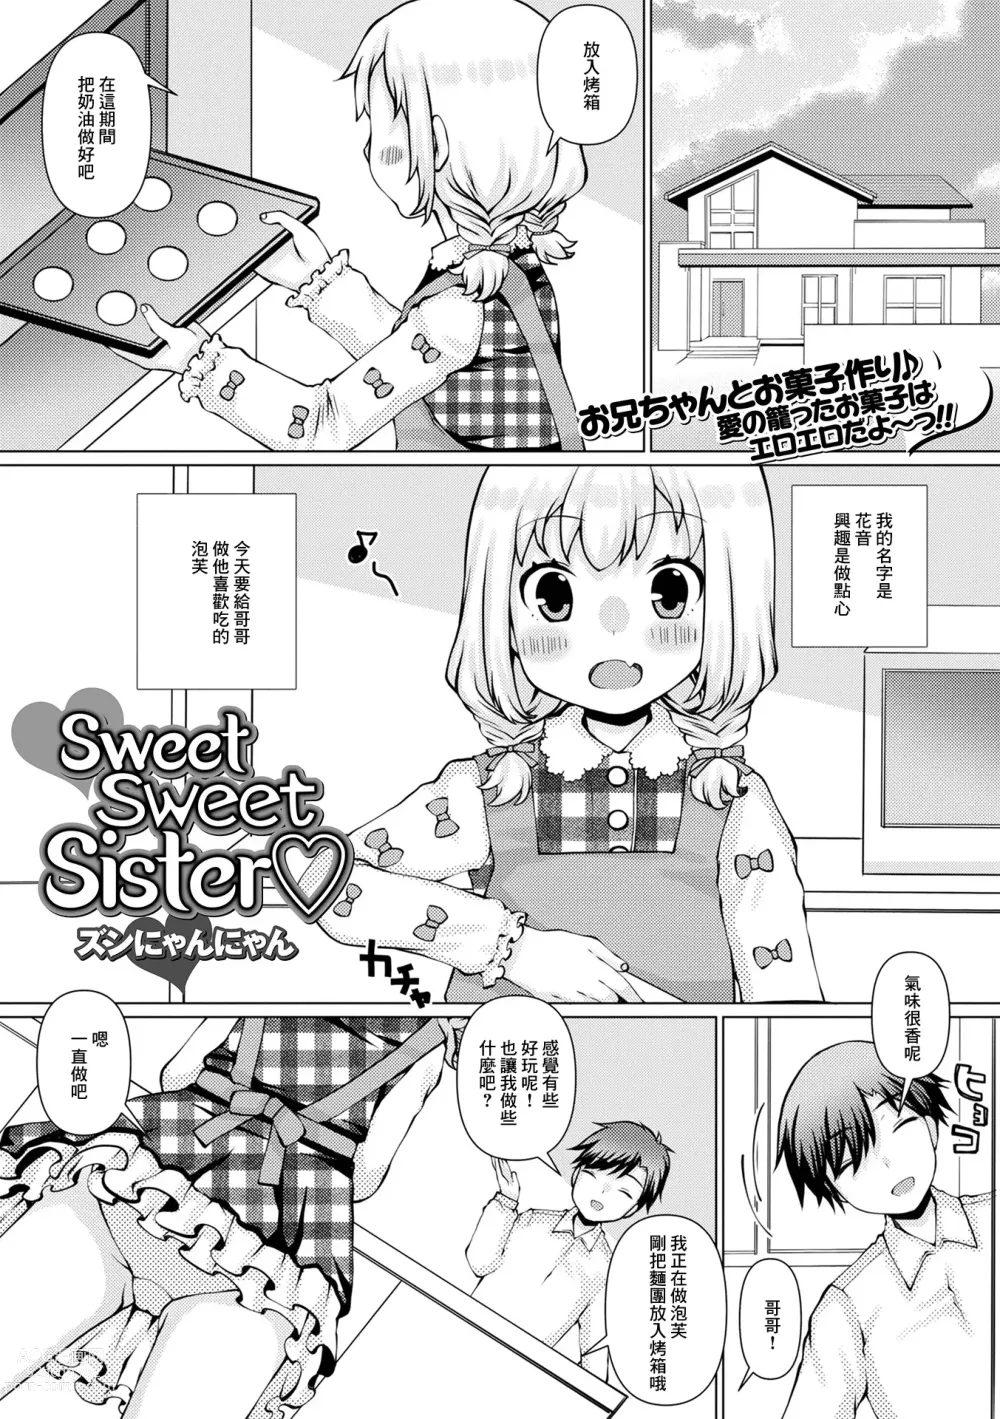 Page 1 of doujinshi Sweet Sweet Sister